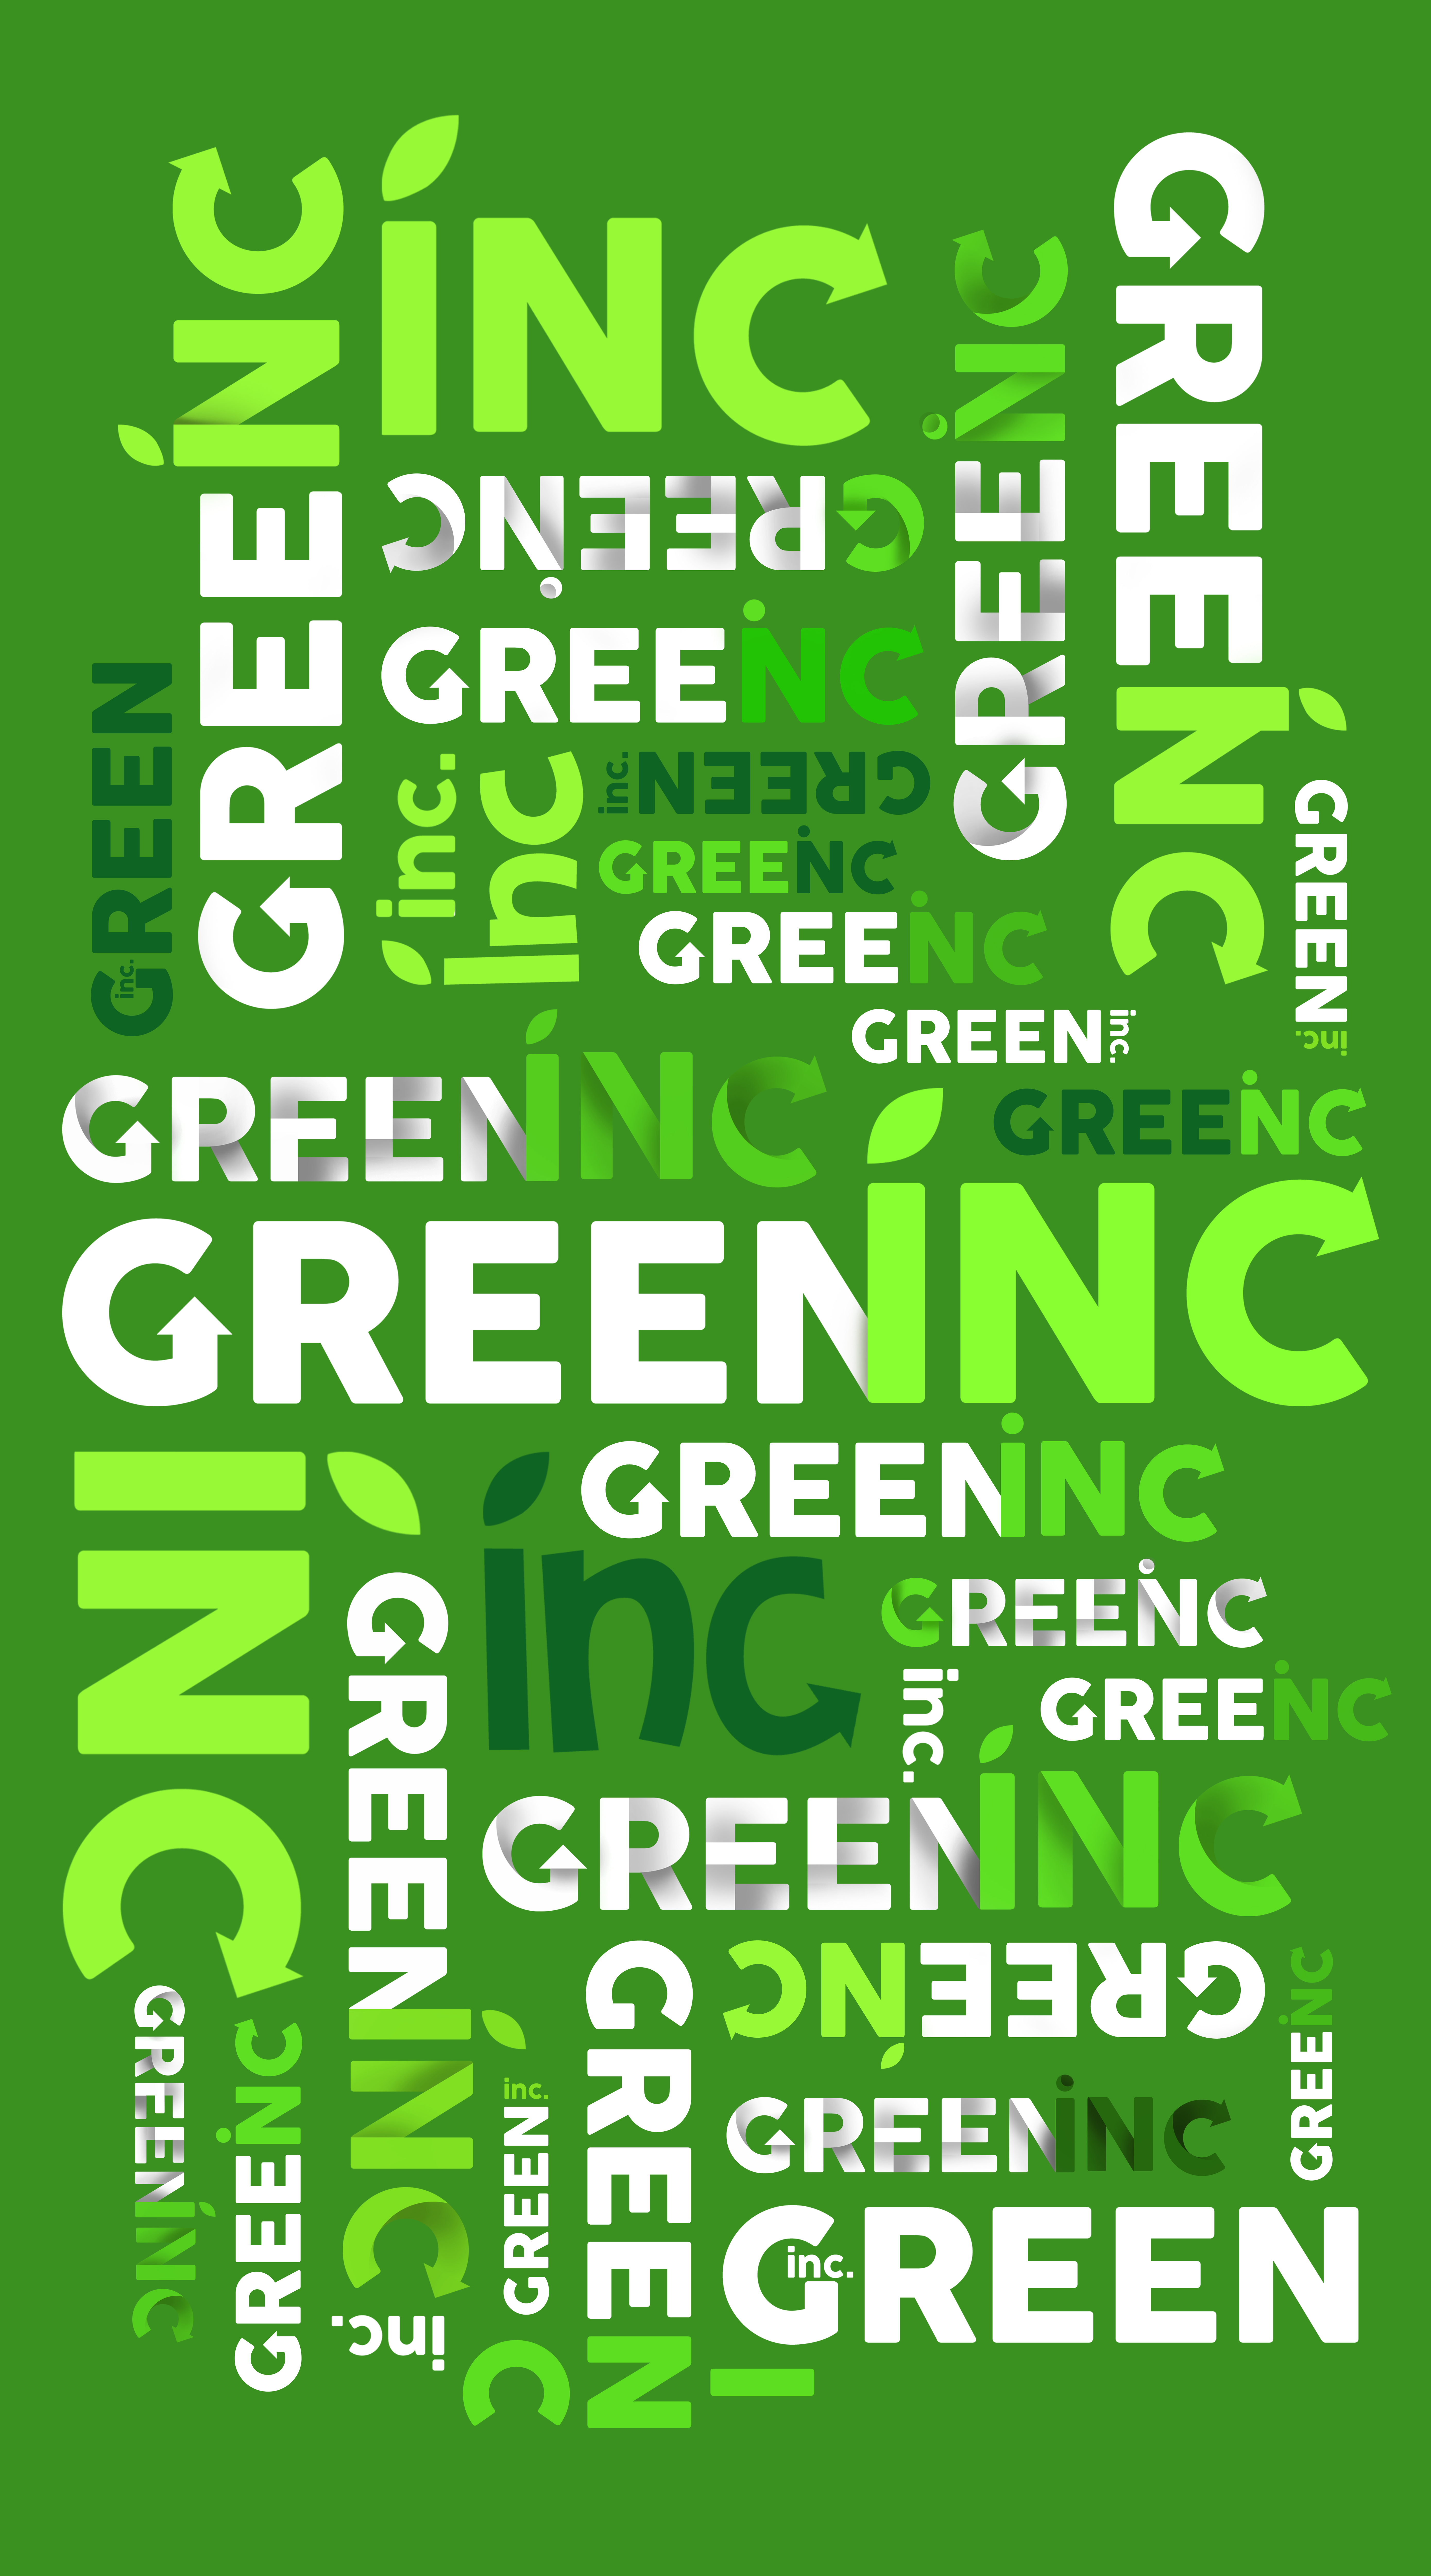 Green Inc Vinyl Banner 2 - Copy (2).jpg